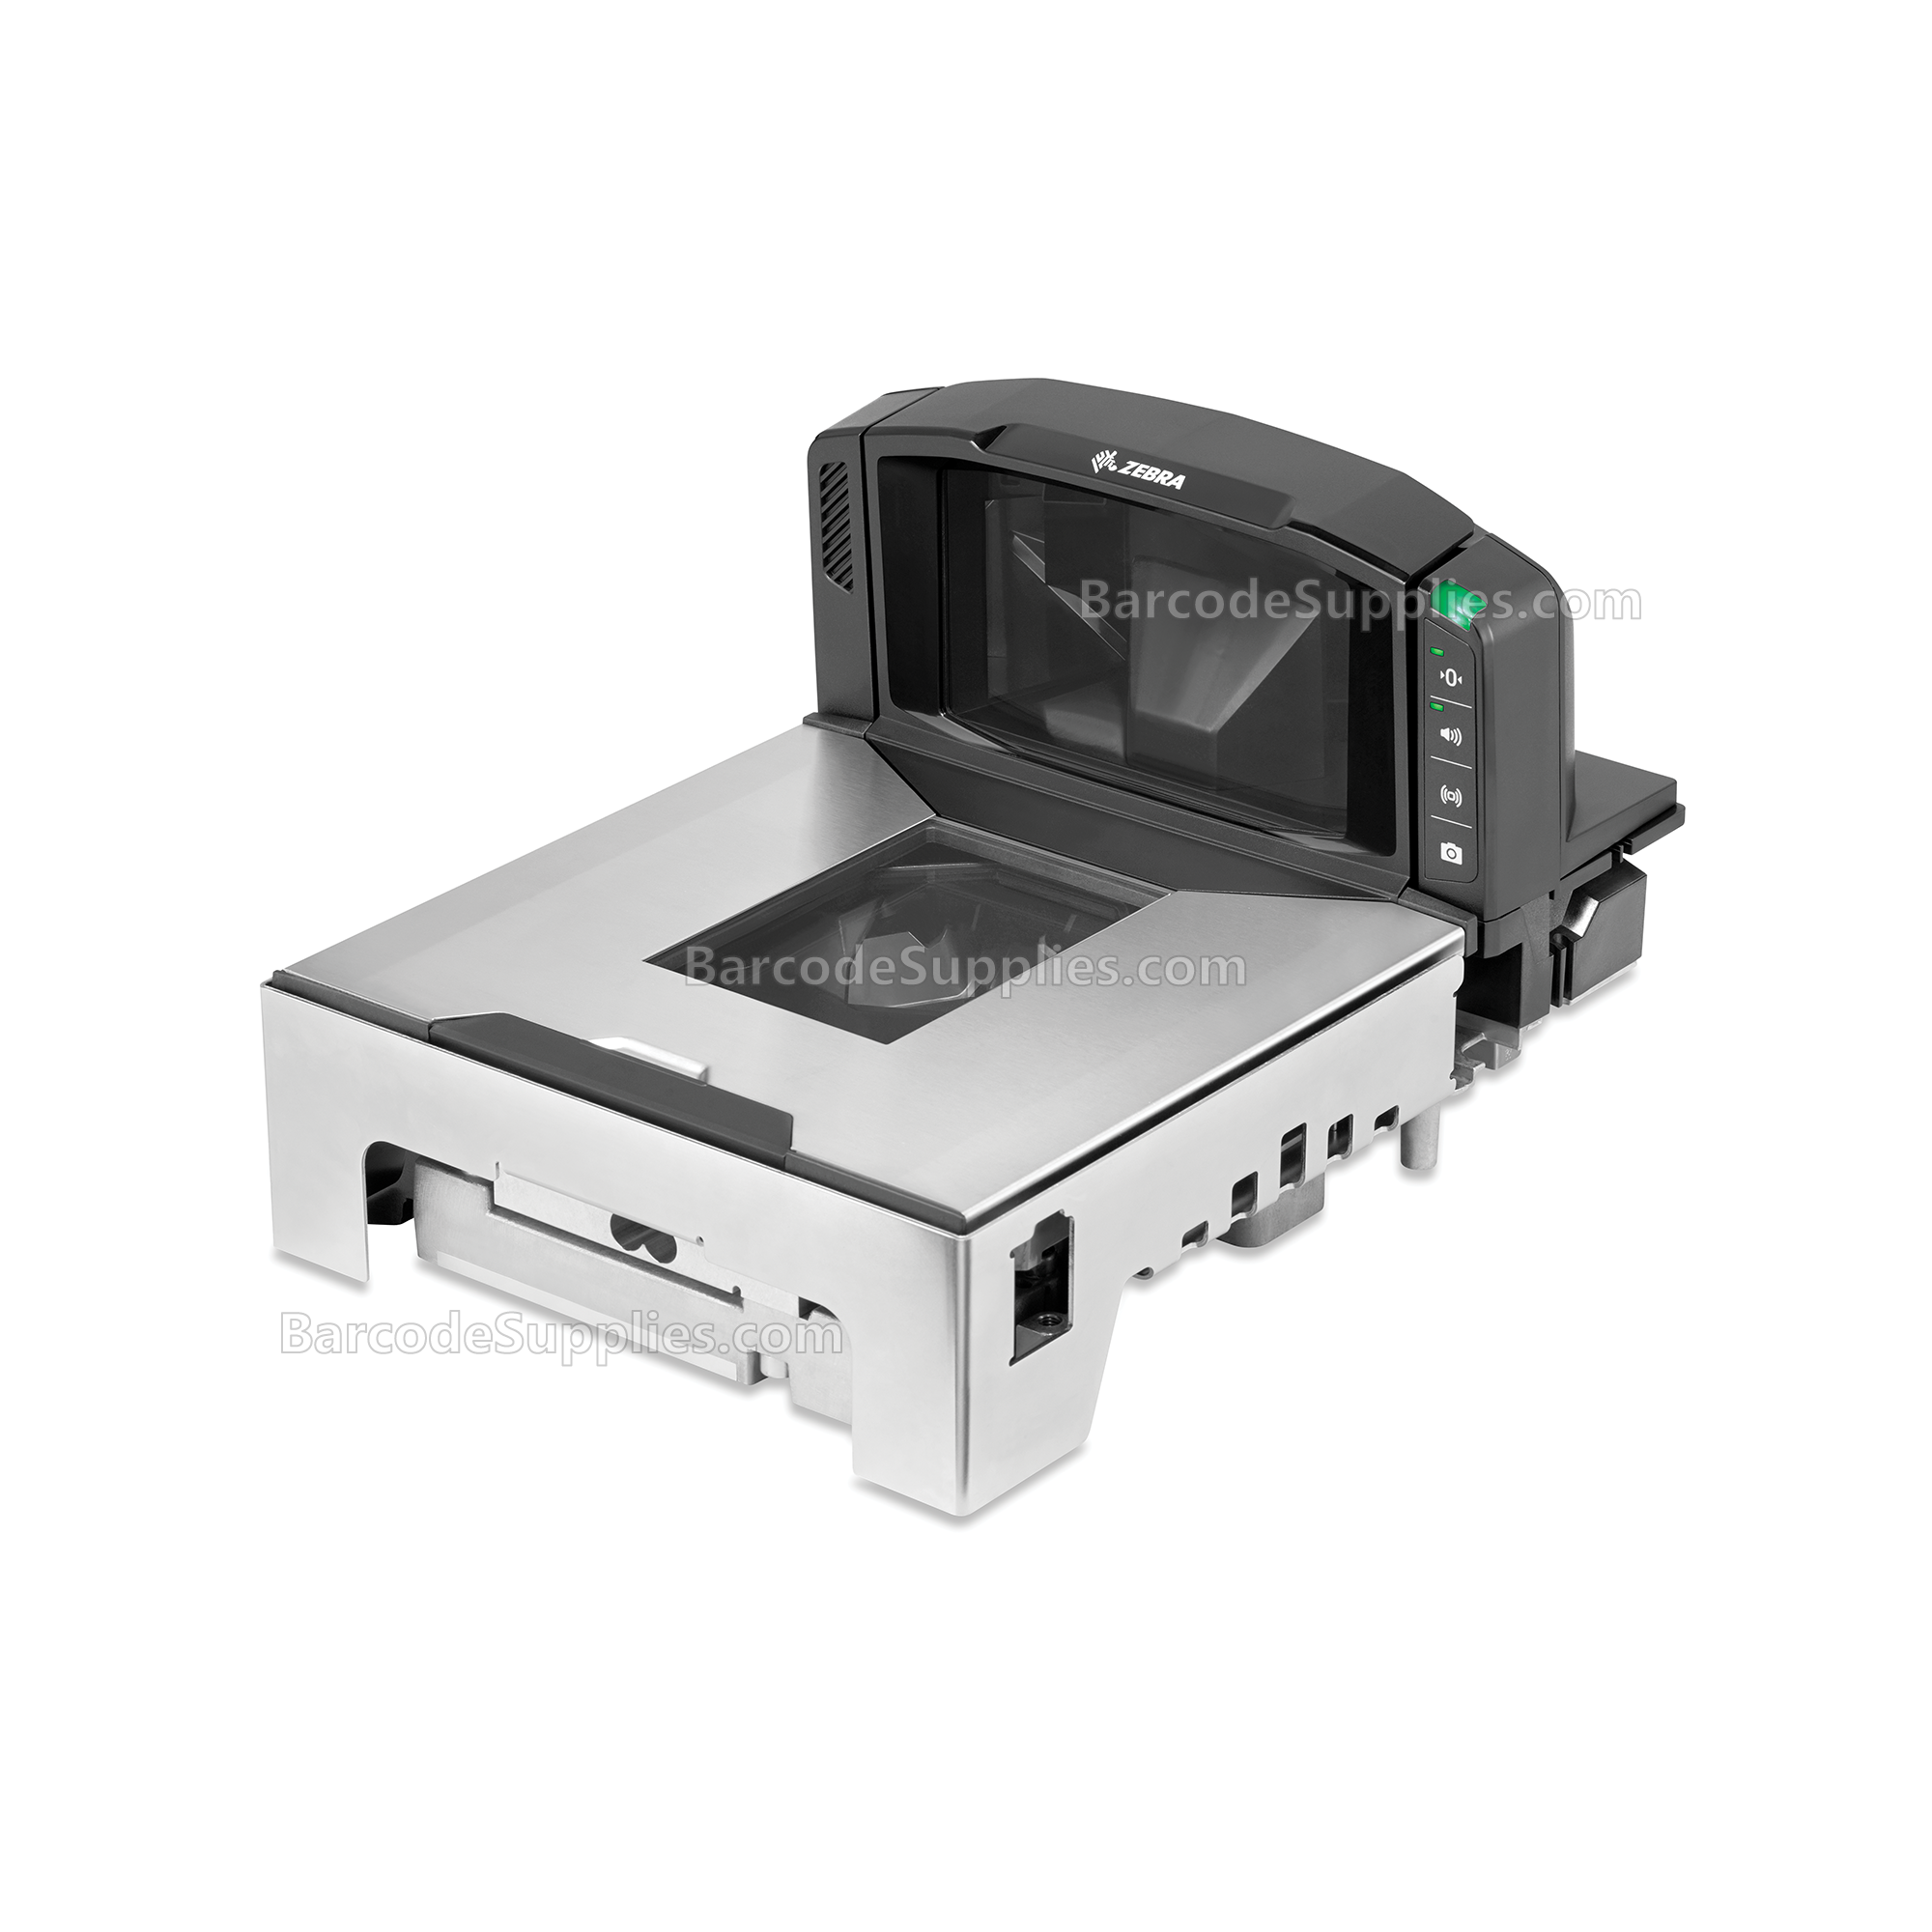 Zebra MP7000: Multiplane scanner, medium, sapphire glass, color camera module landscape, Worldwide